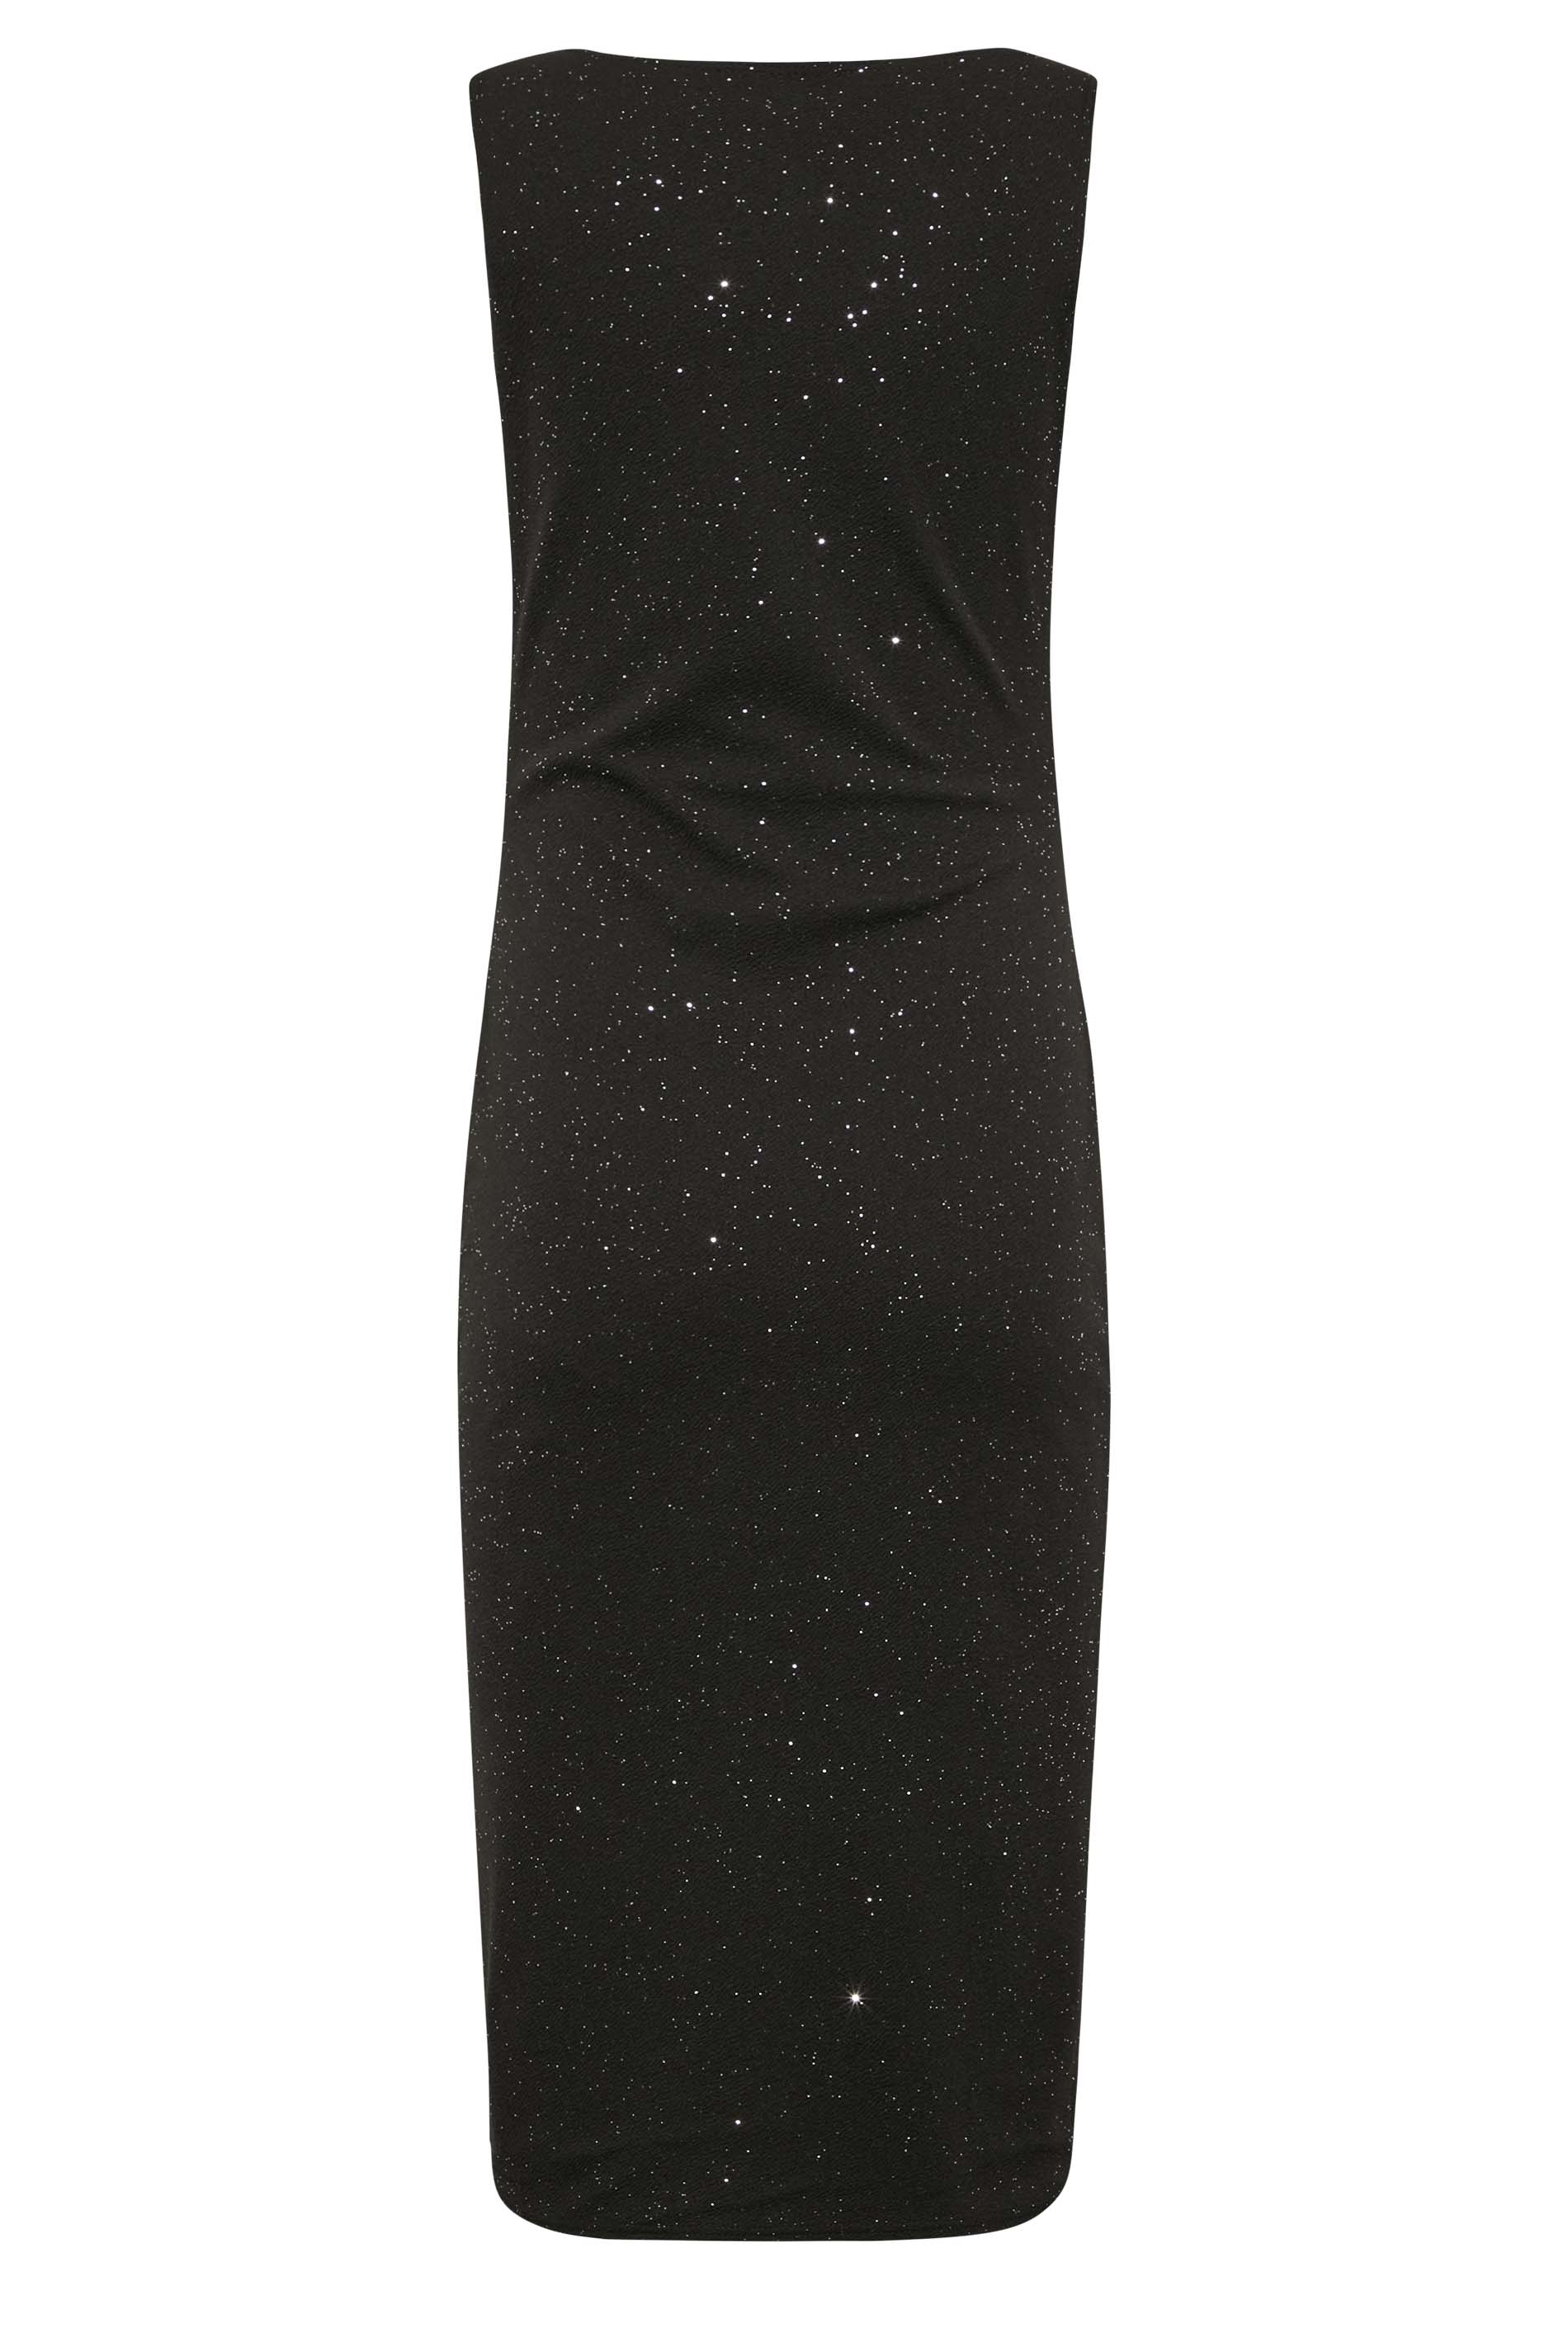 LTS Tall Women's Black Glitter Notch Neck Midi Dress | Long Tall Sally 3